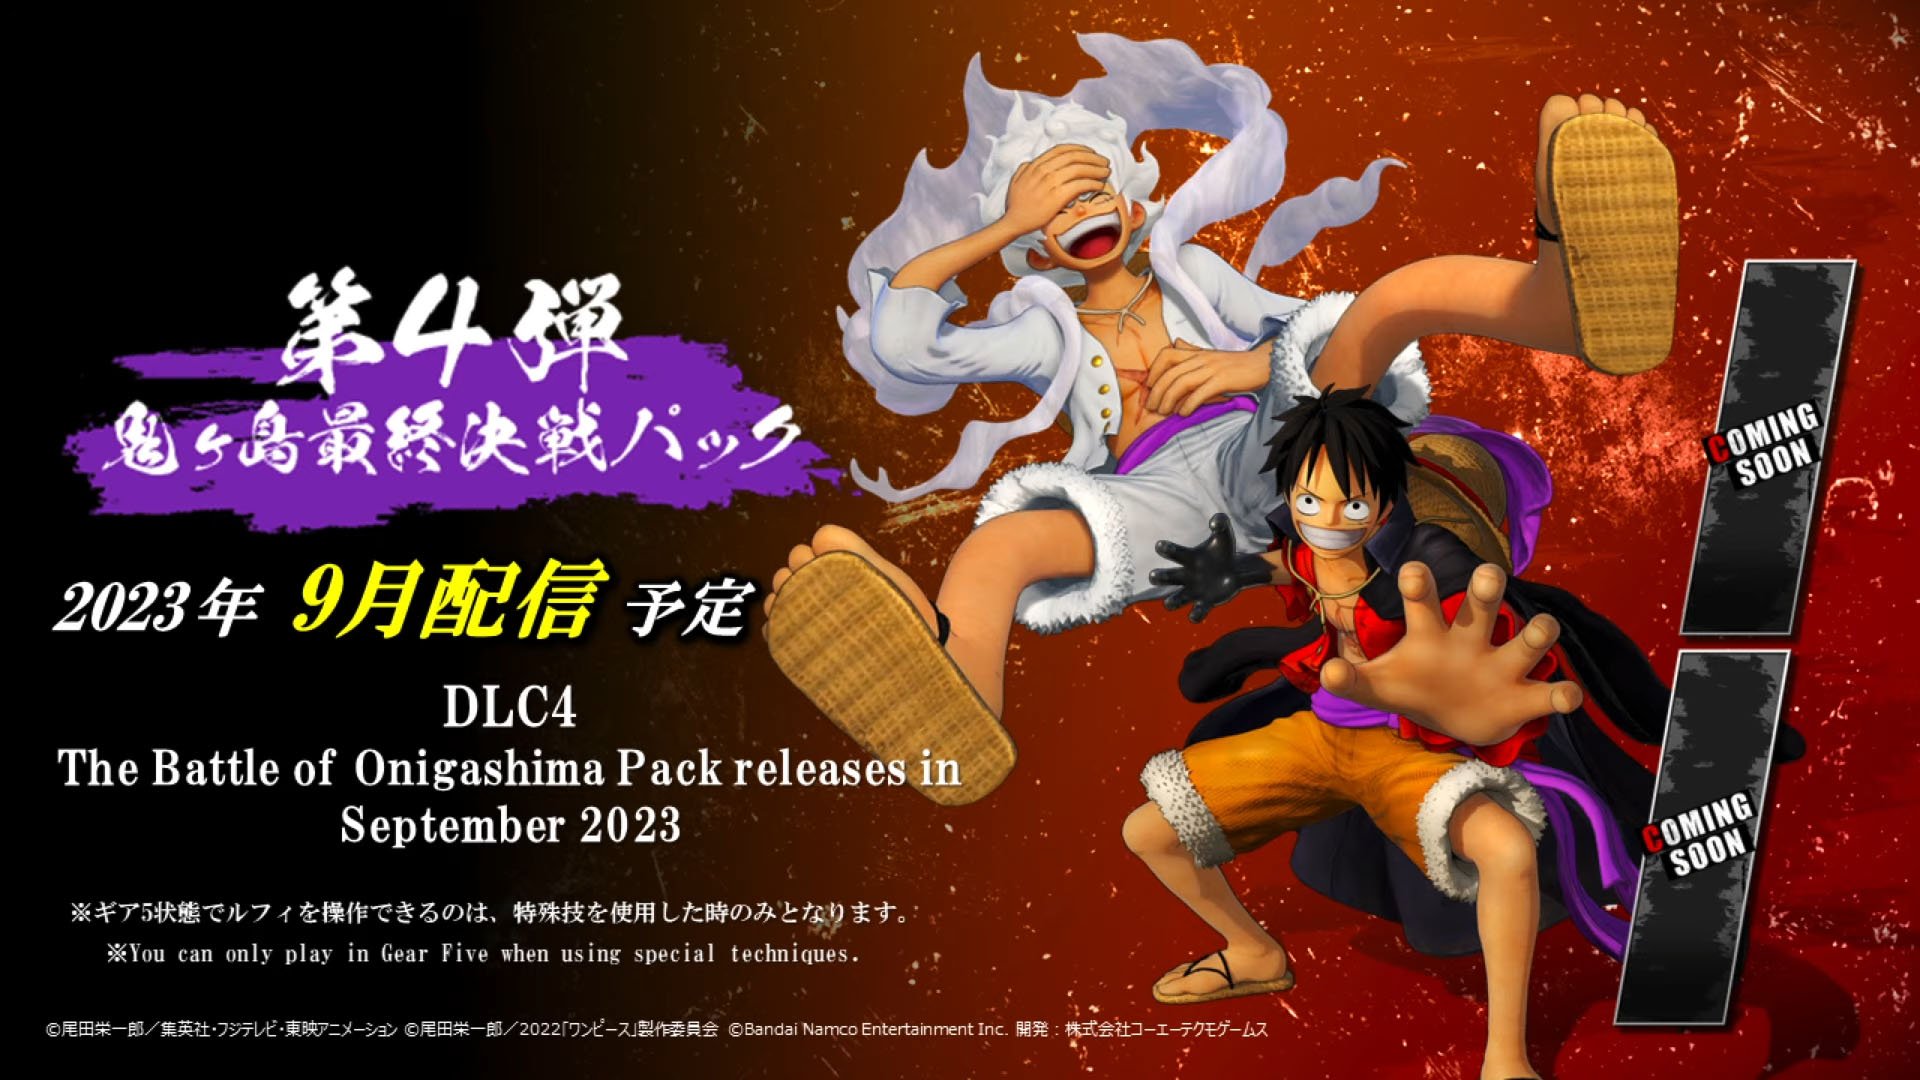 One Piece: Pirate Warriors 4 Character Pass 2 announced - Gematsu